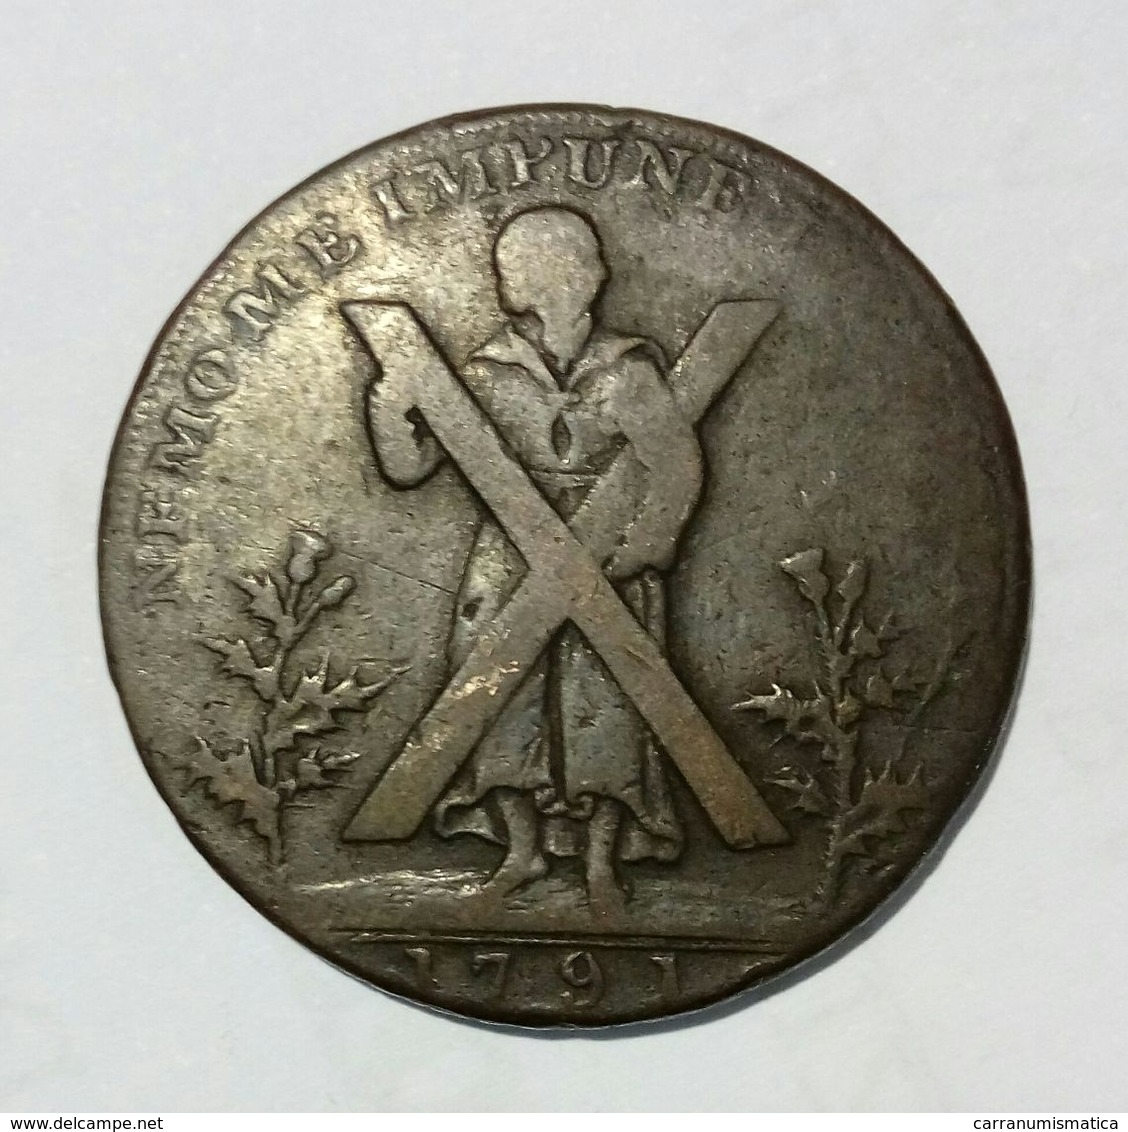 SCOTLAND - EDINBURGH - Half Penny Token (1791) - Notgeld